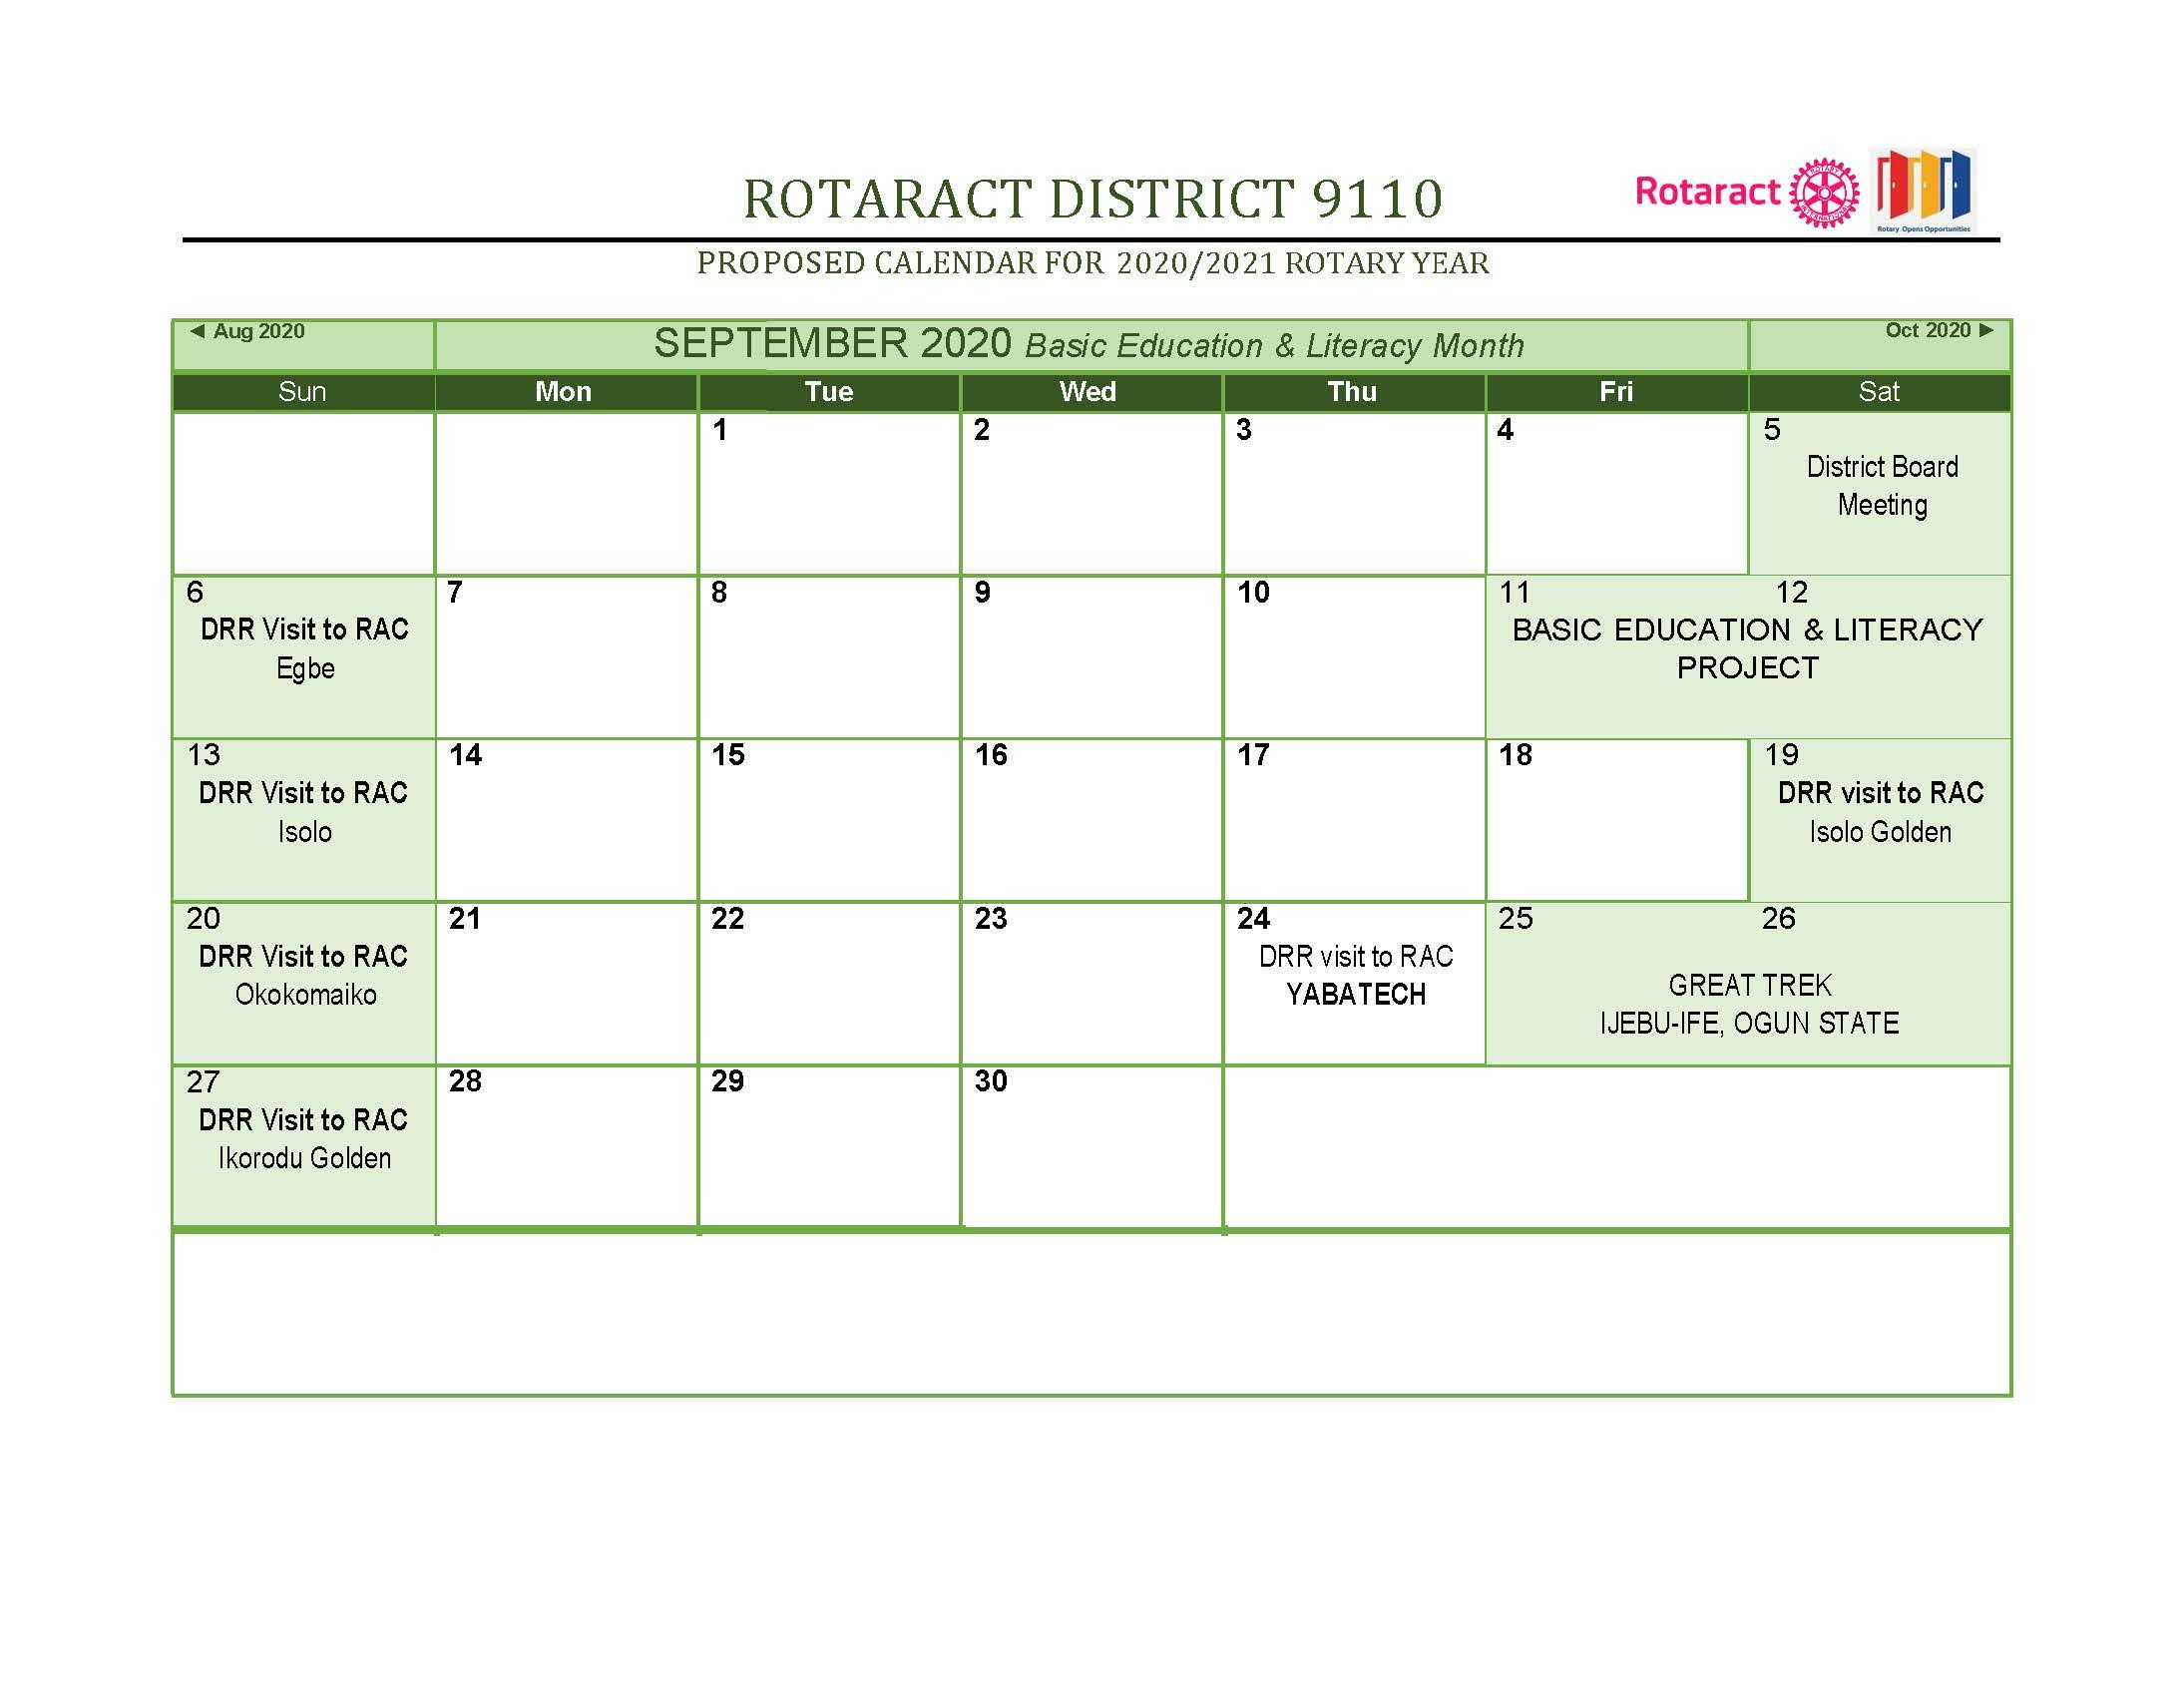 Events Calendar - Rotaract District 9110, Nigeria